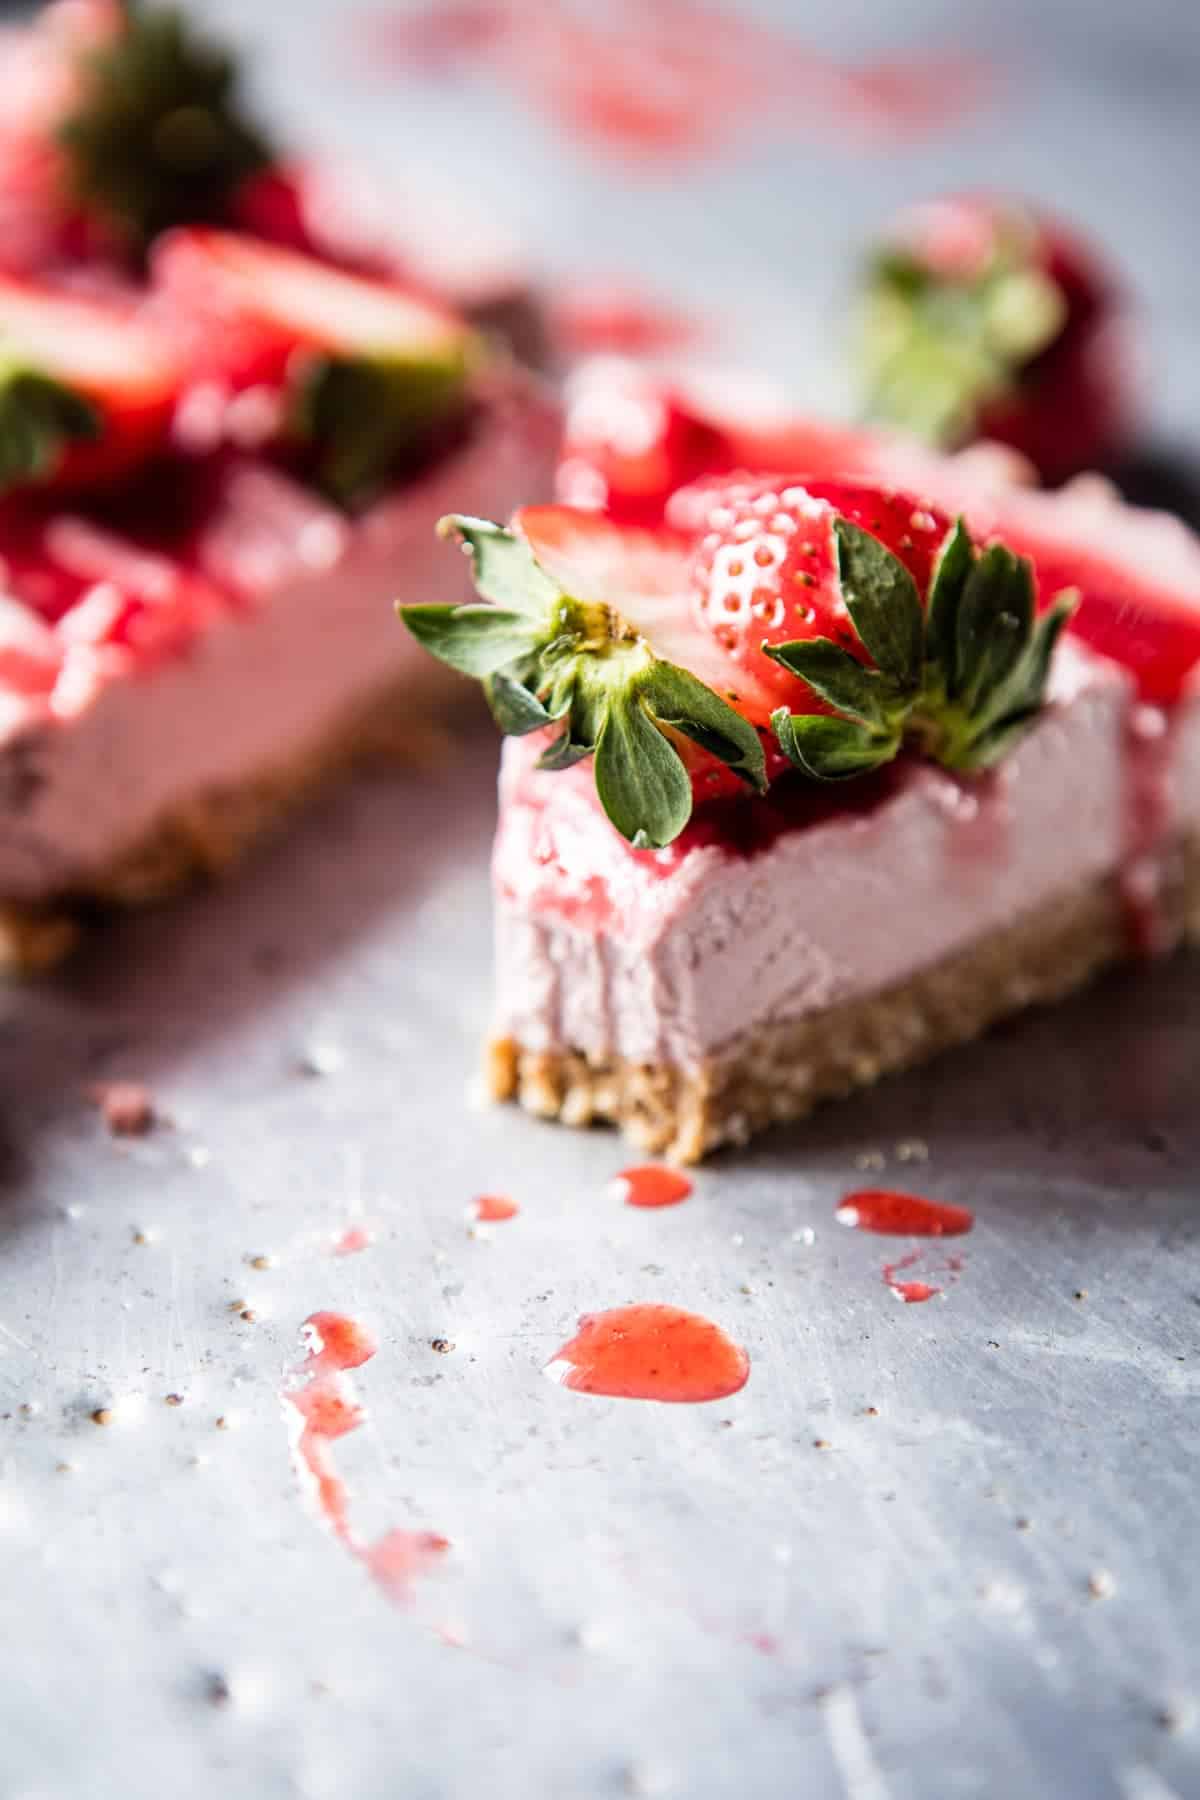 Strawberry Ripple Almond Cheesecake | halfbakedharvest.com @hbharvest